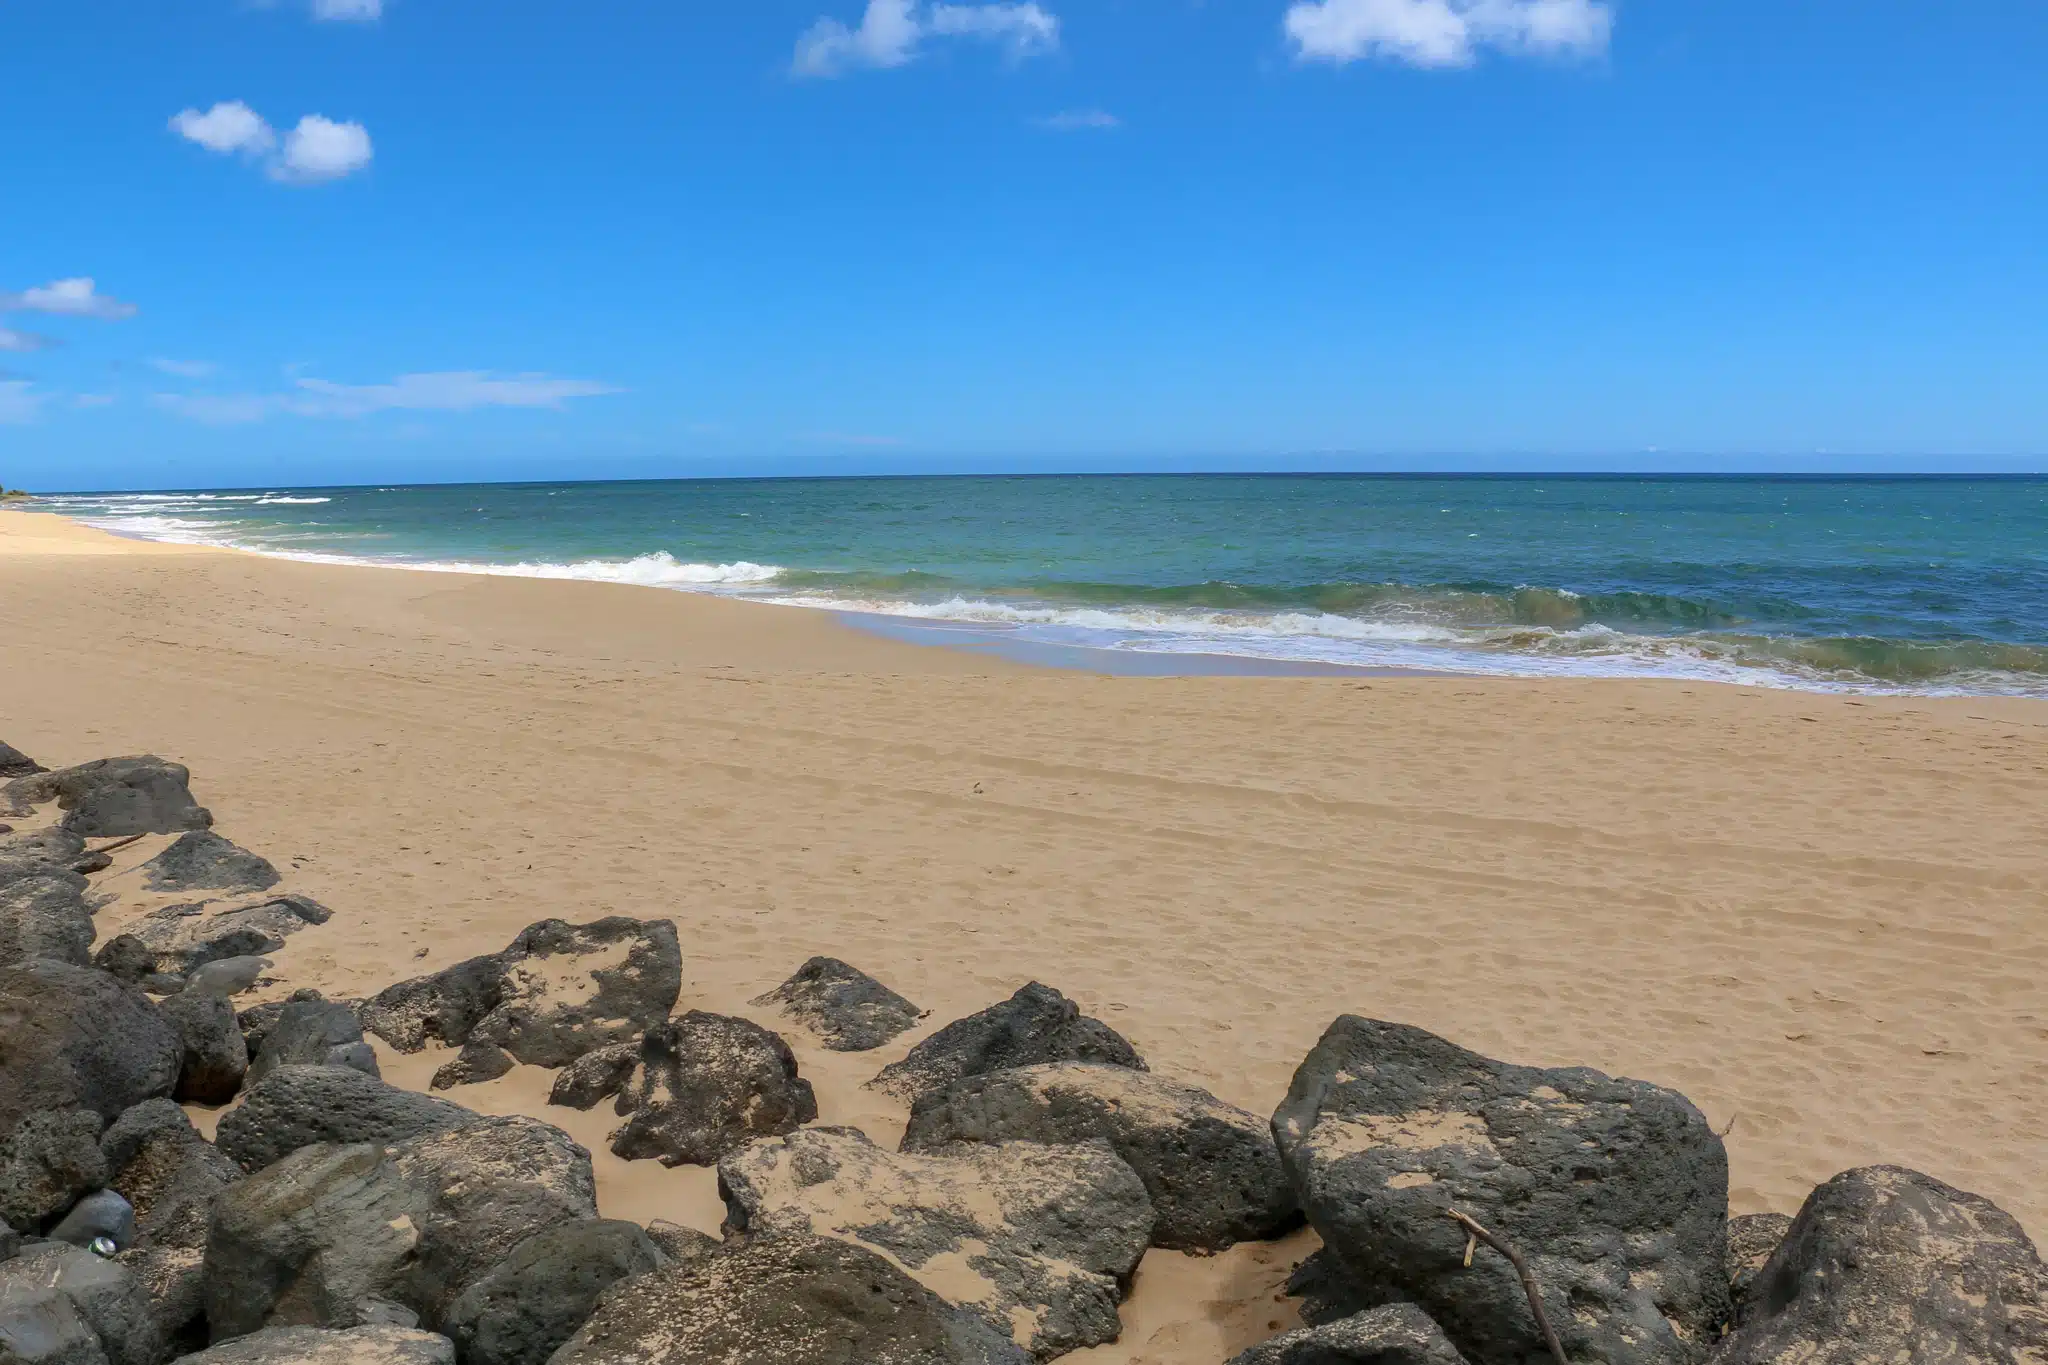 Kekaha Beach is a Beach located in the city of Kekaha on Kauai, Hawaii